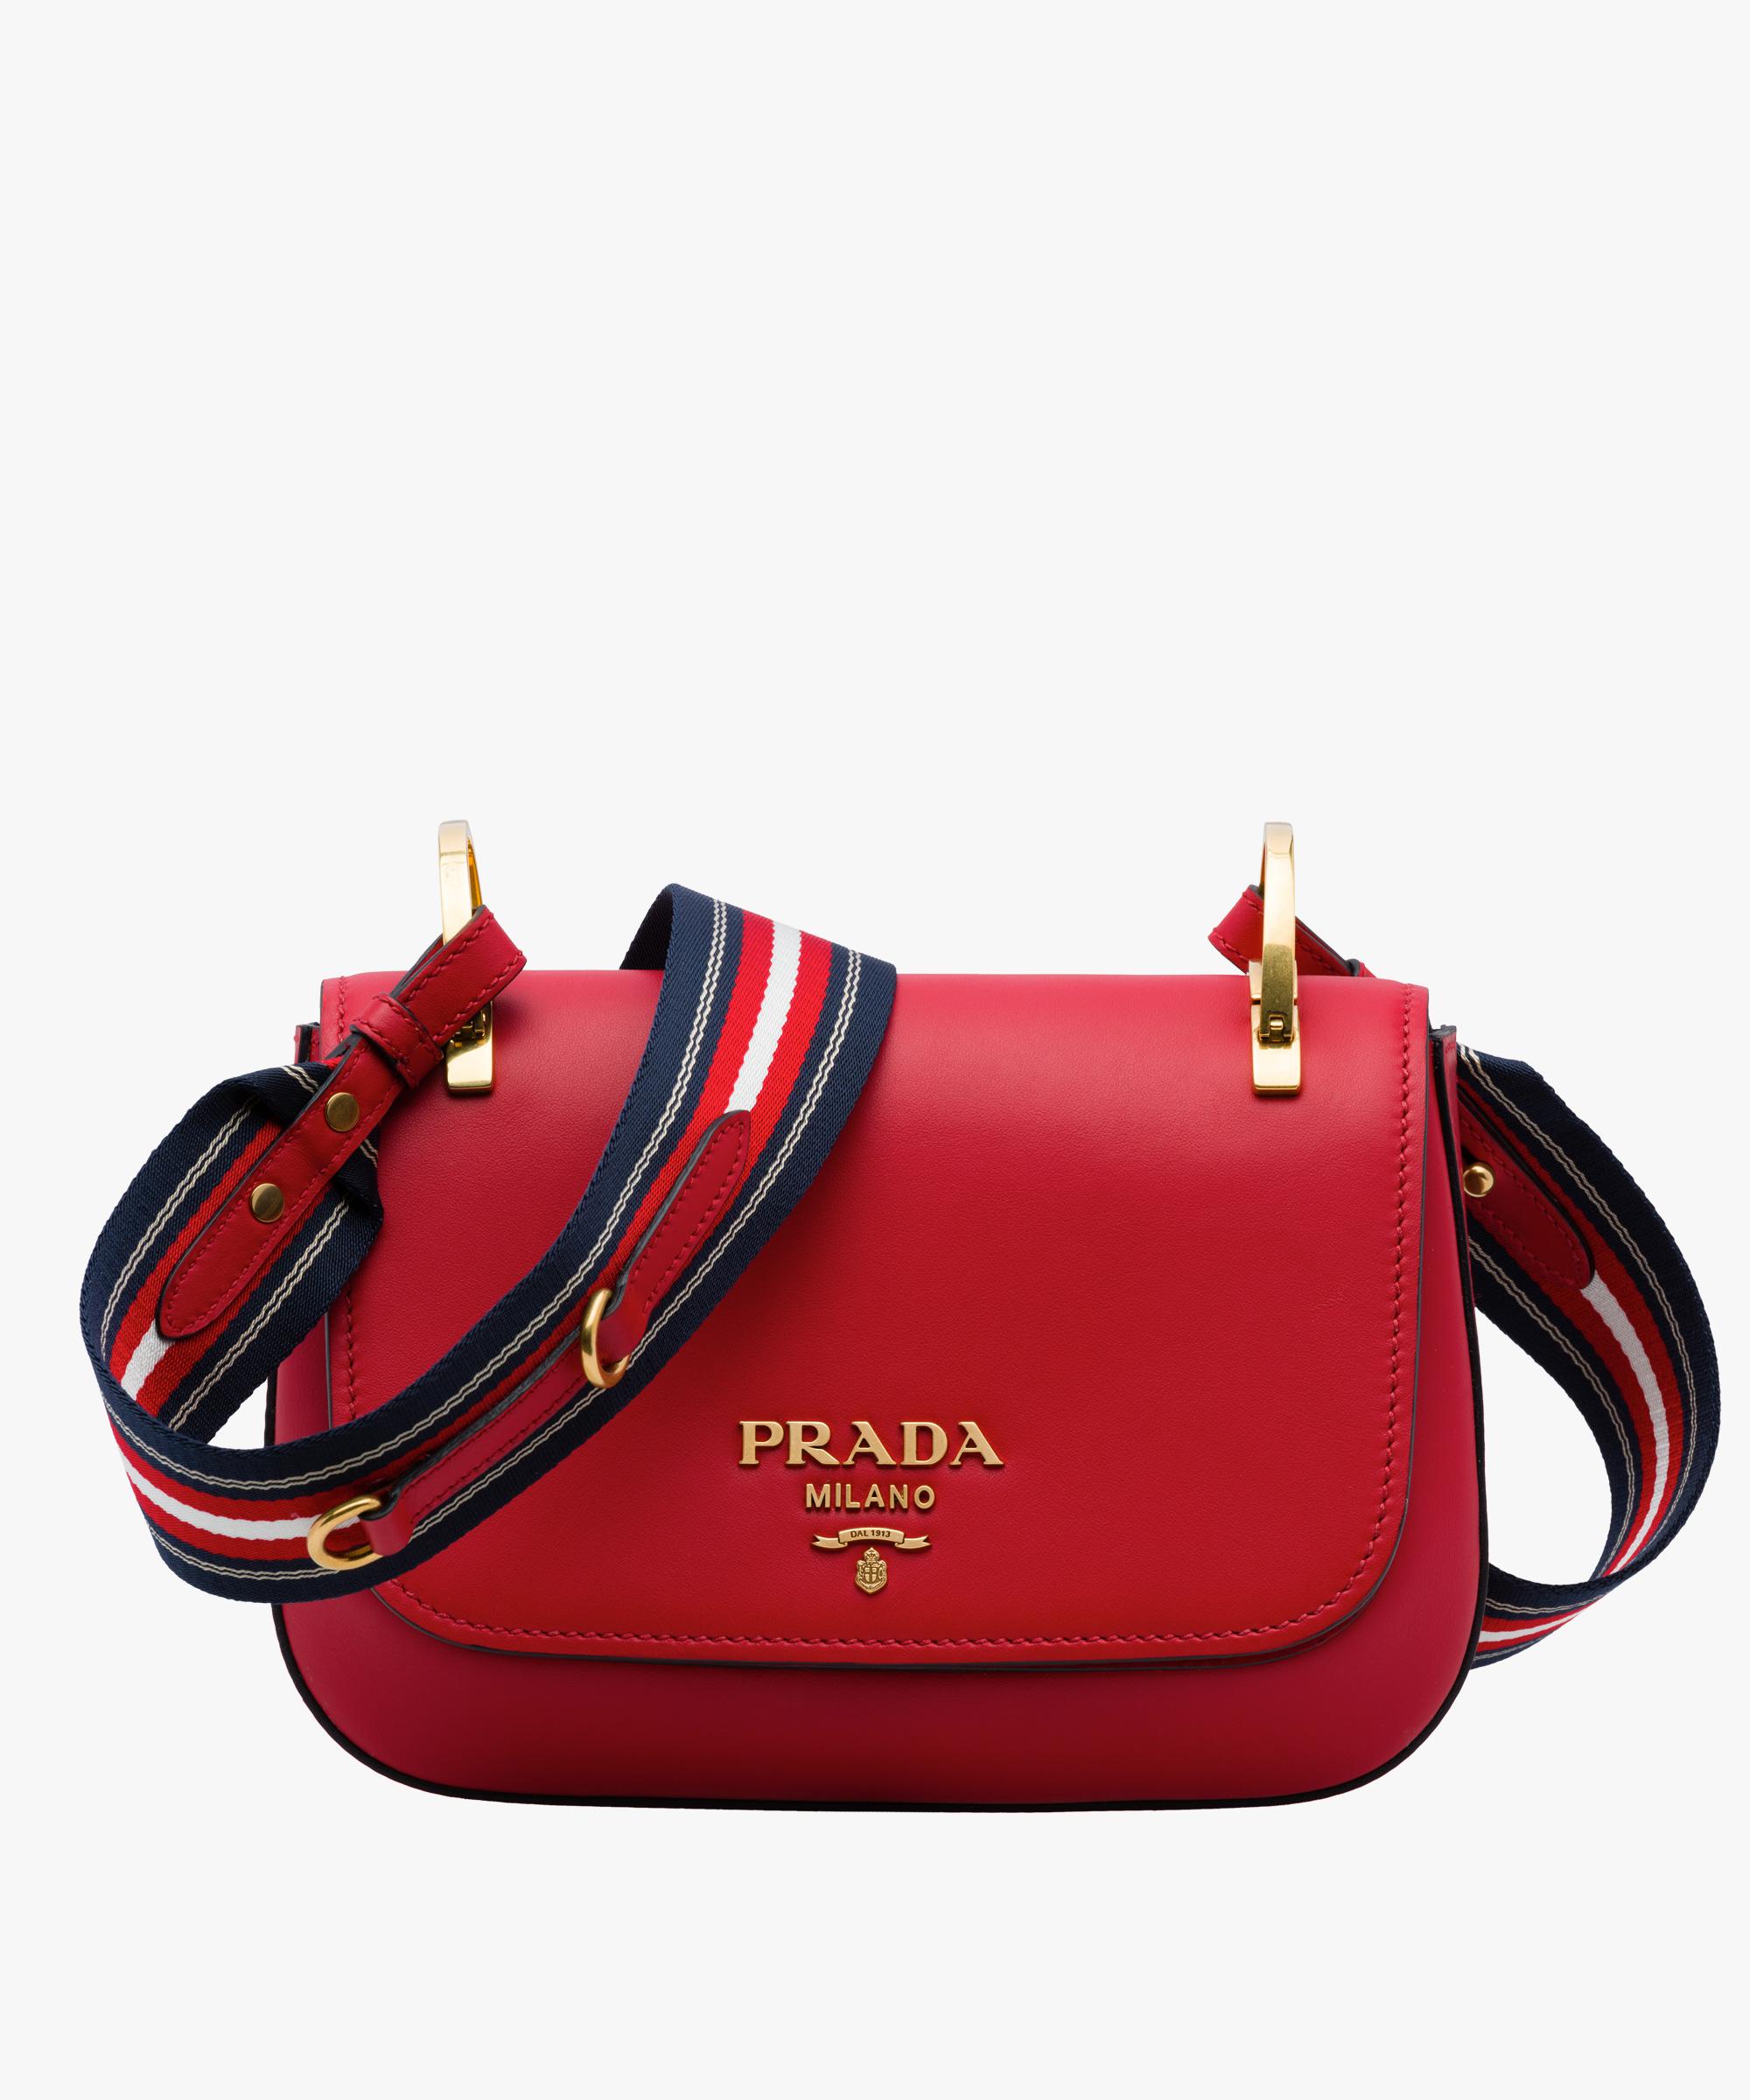 prada sling bag red, OFF 75%,www 